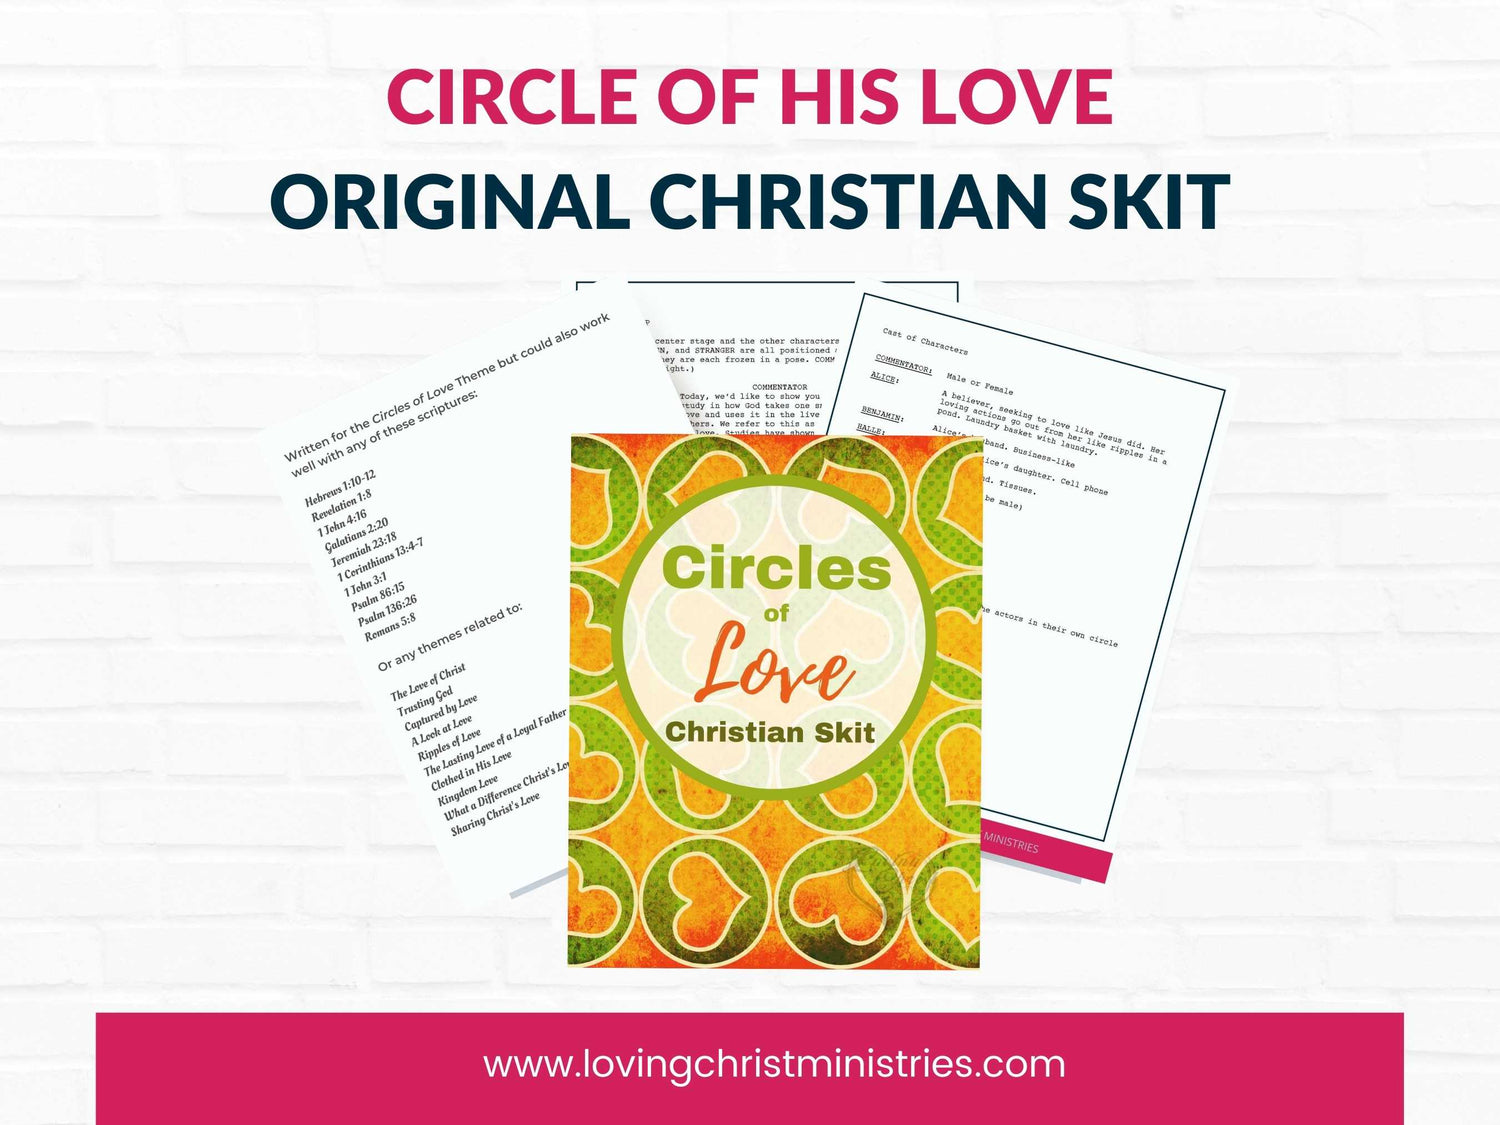 Circles of Love - Christian Skit